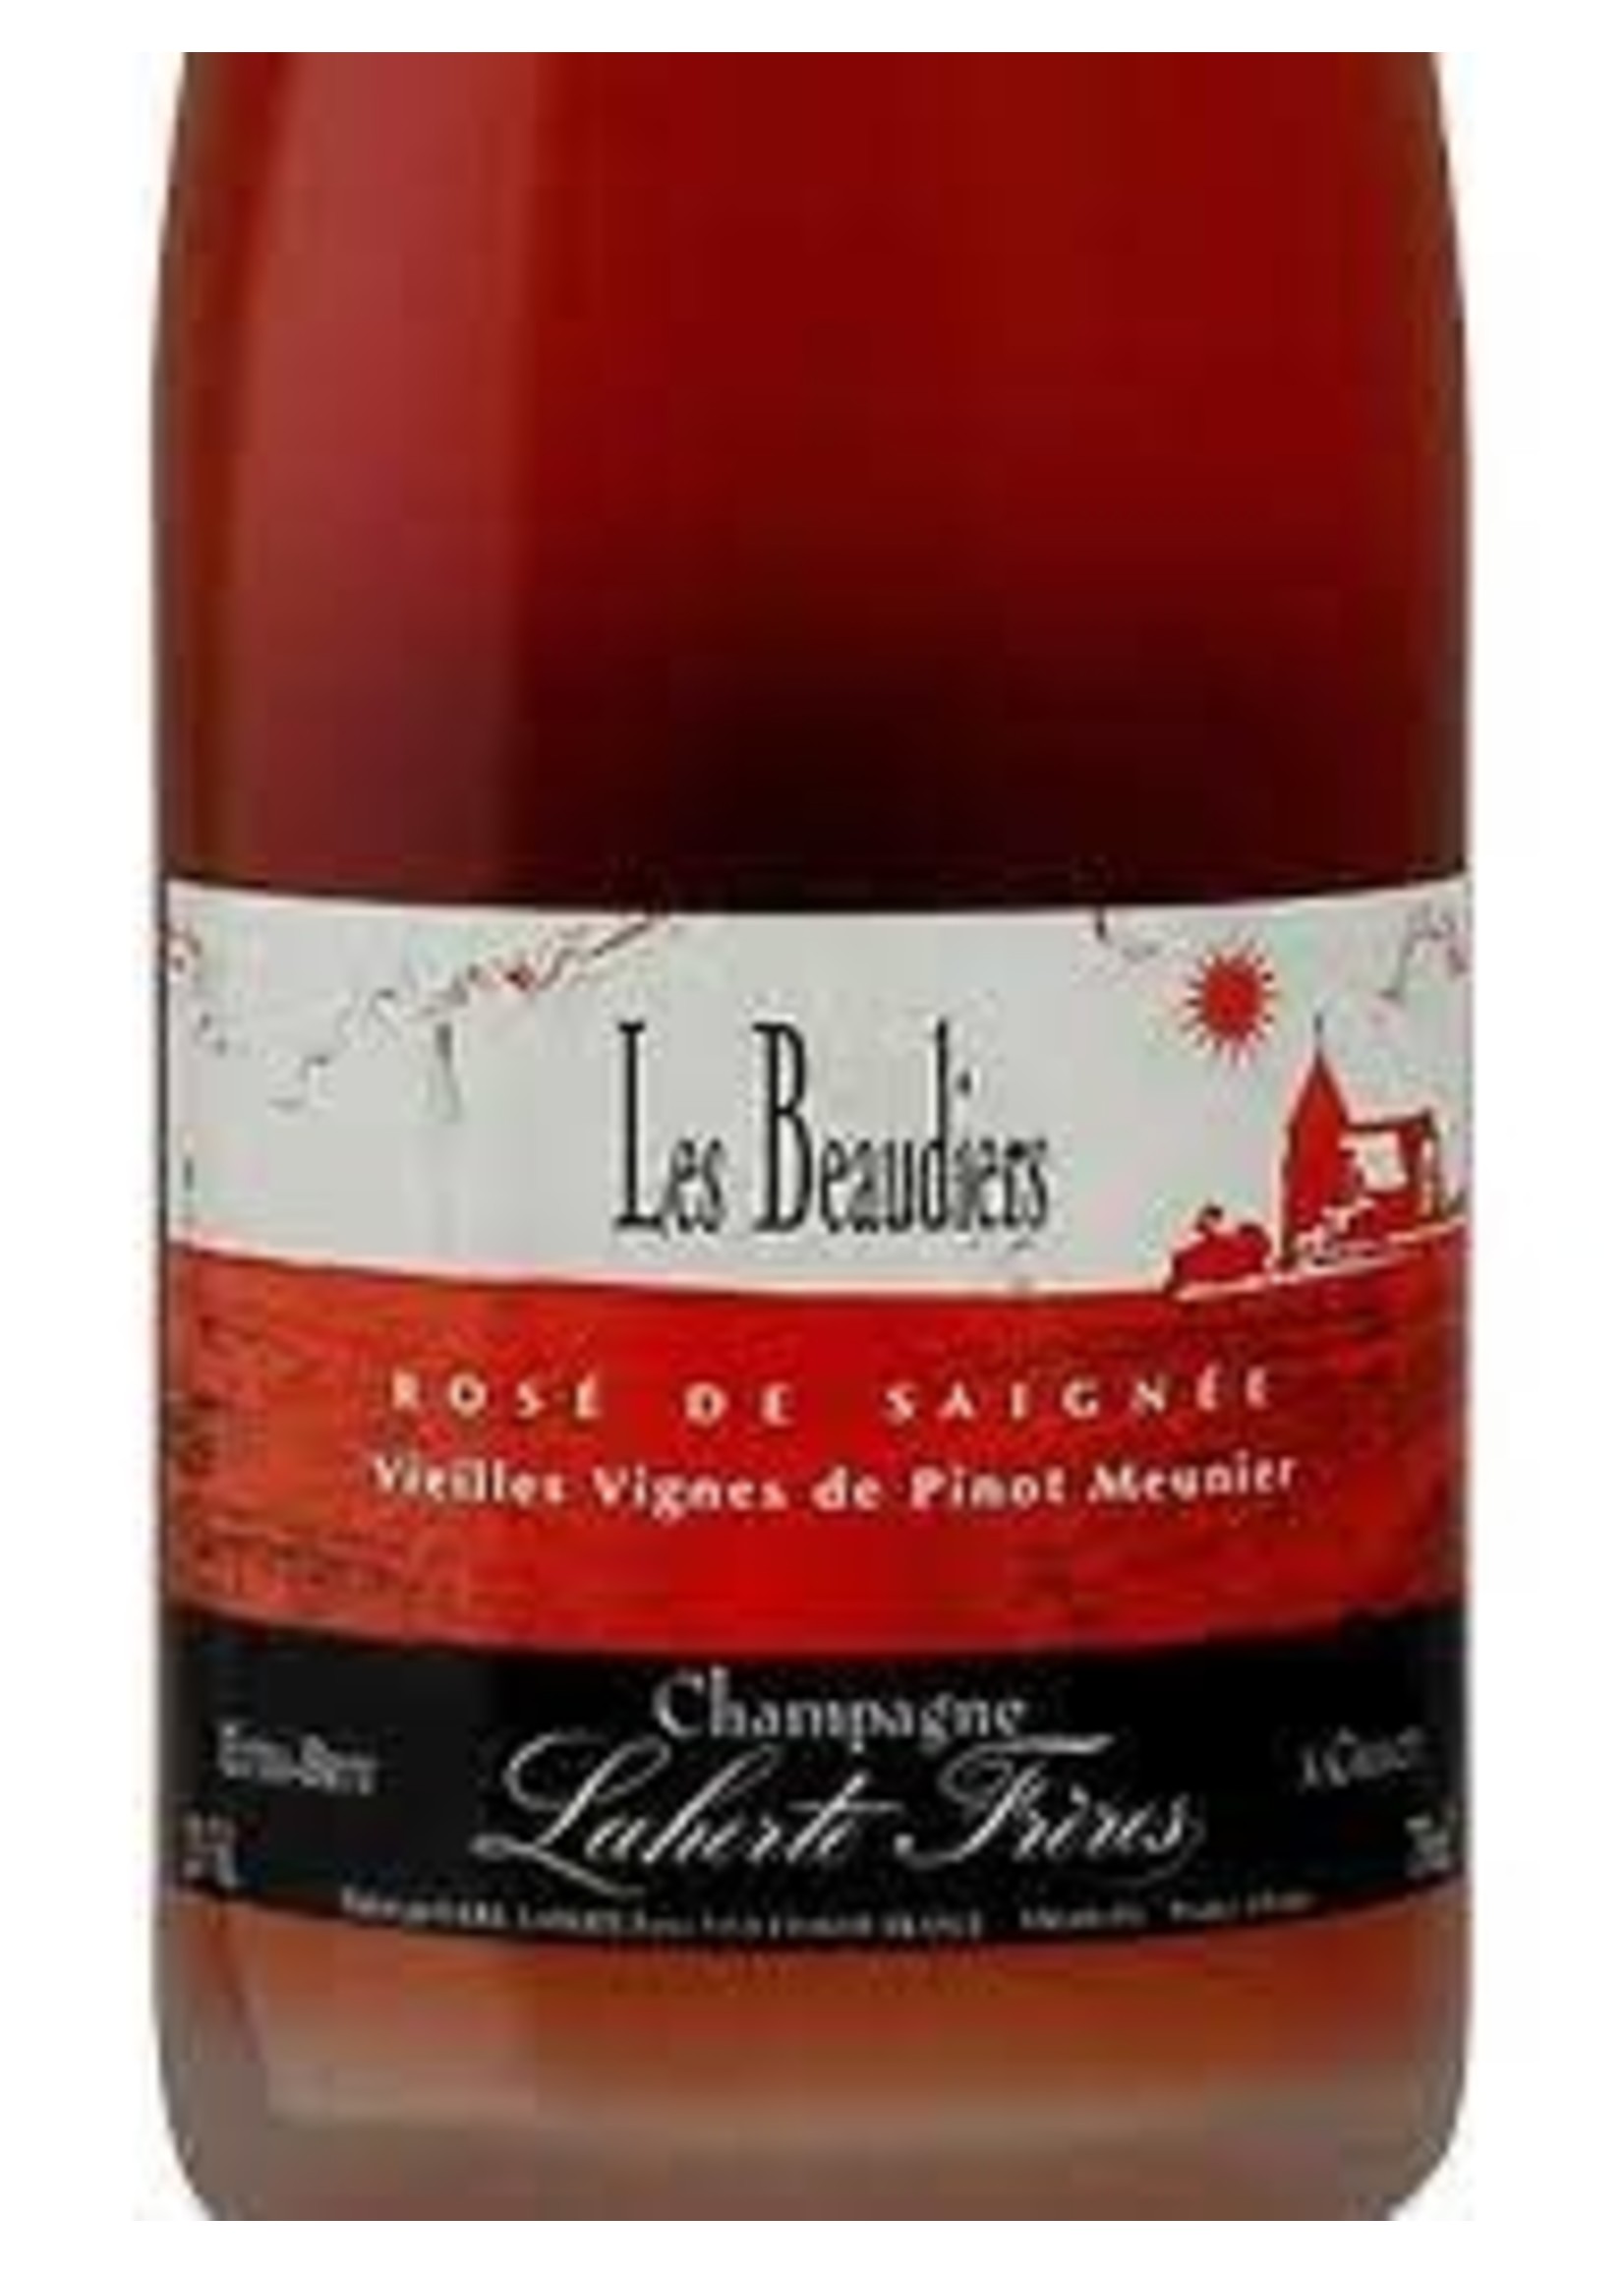 Laherte Freres 2019 Champagne 'Les Beaudiers' Rose de Saignee Extra Brut 750ml